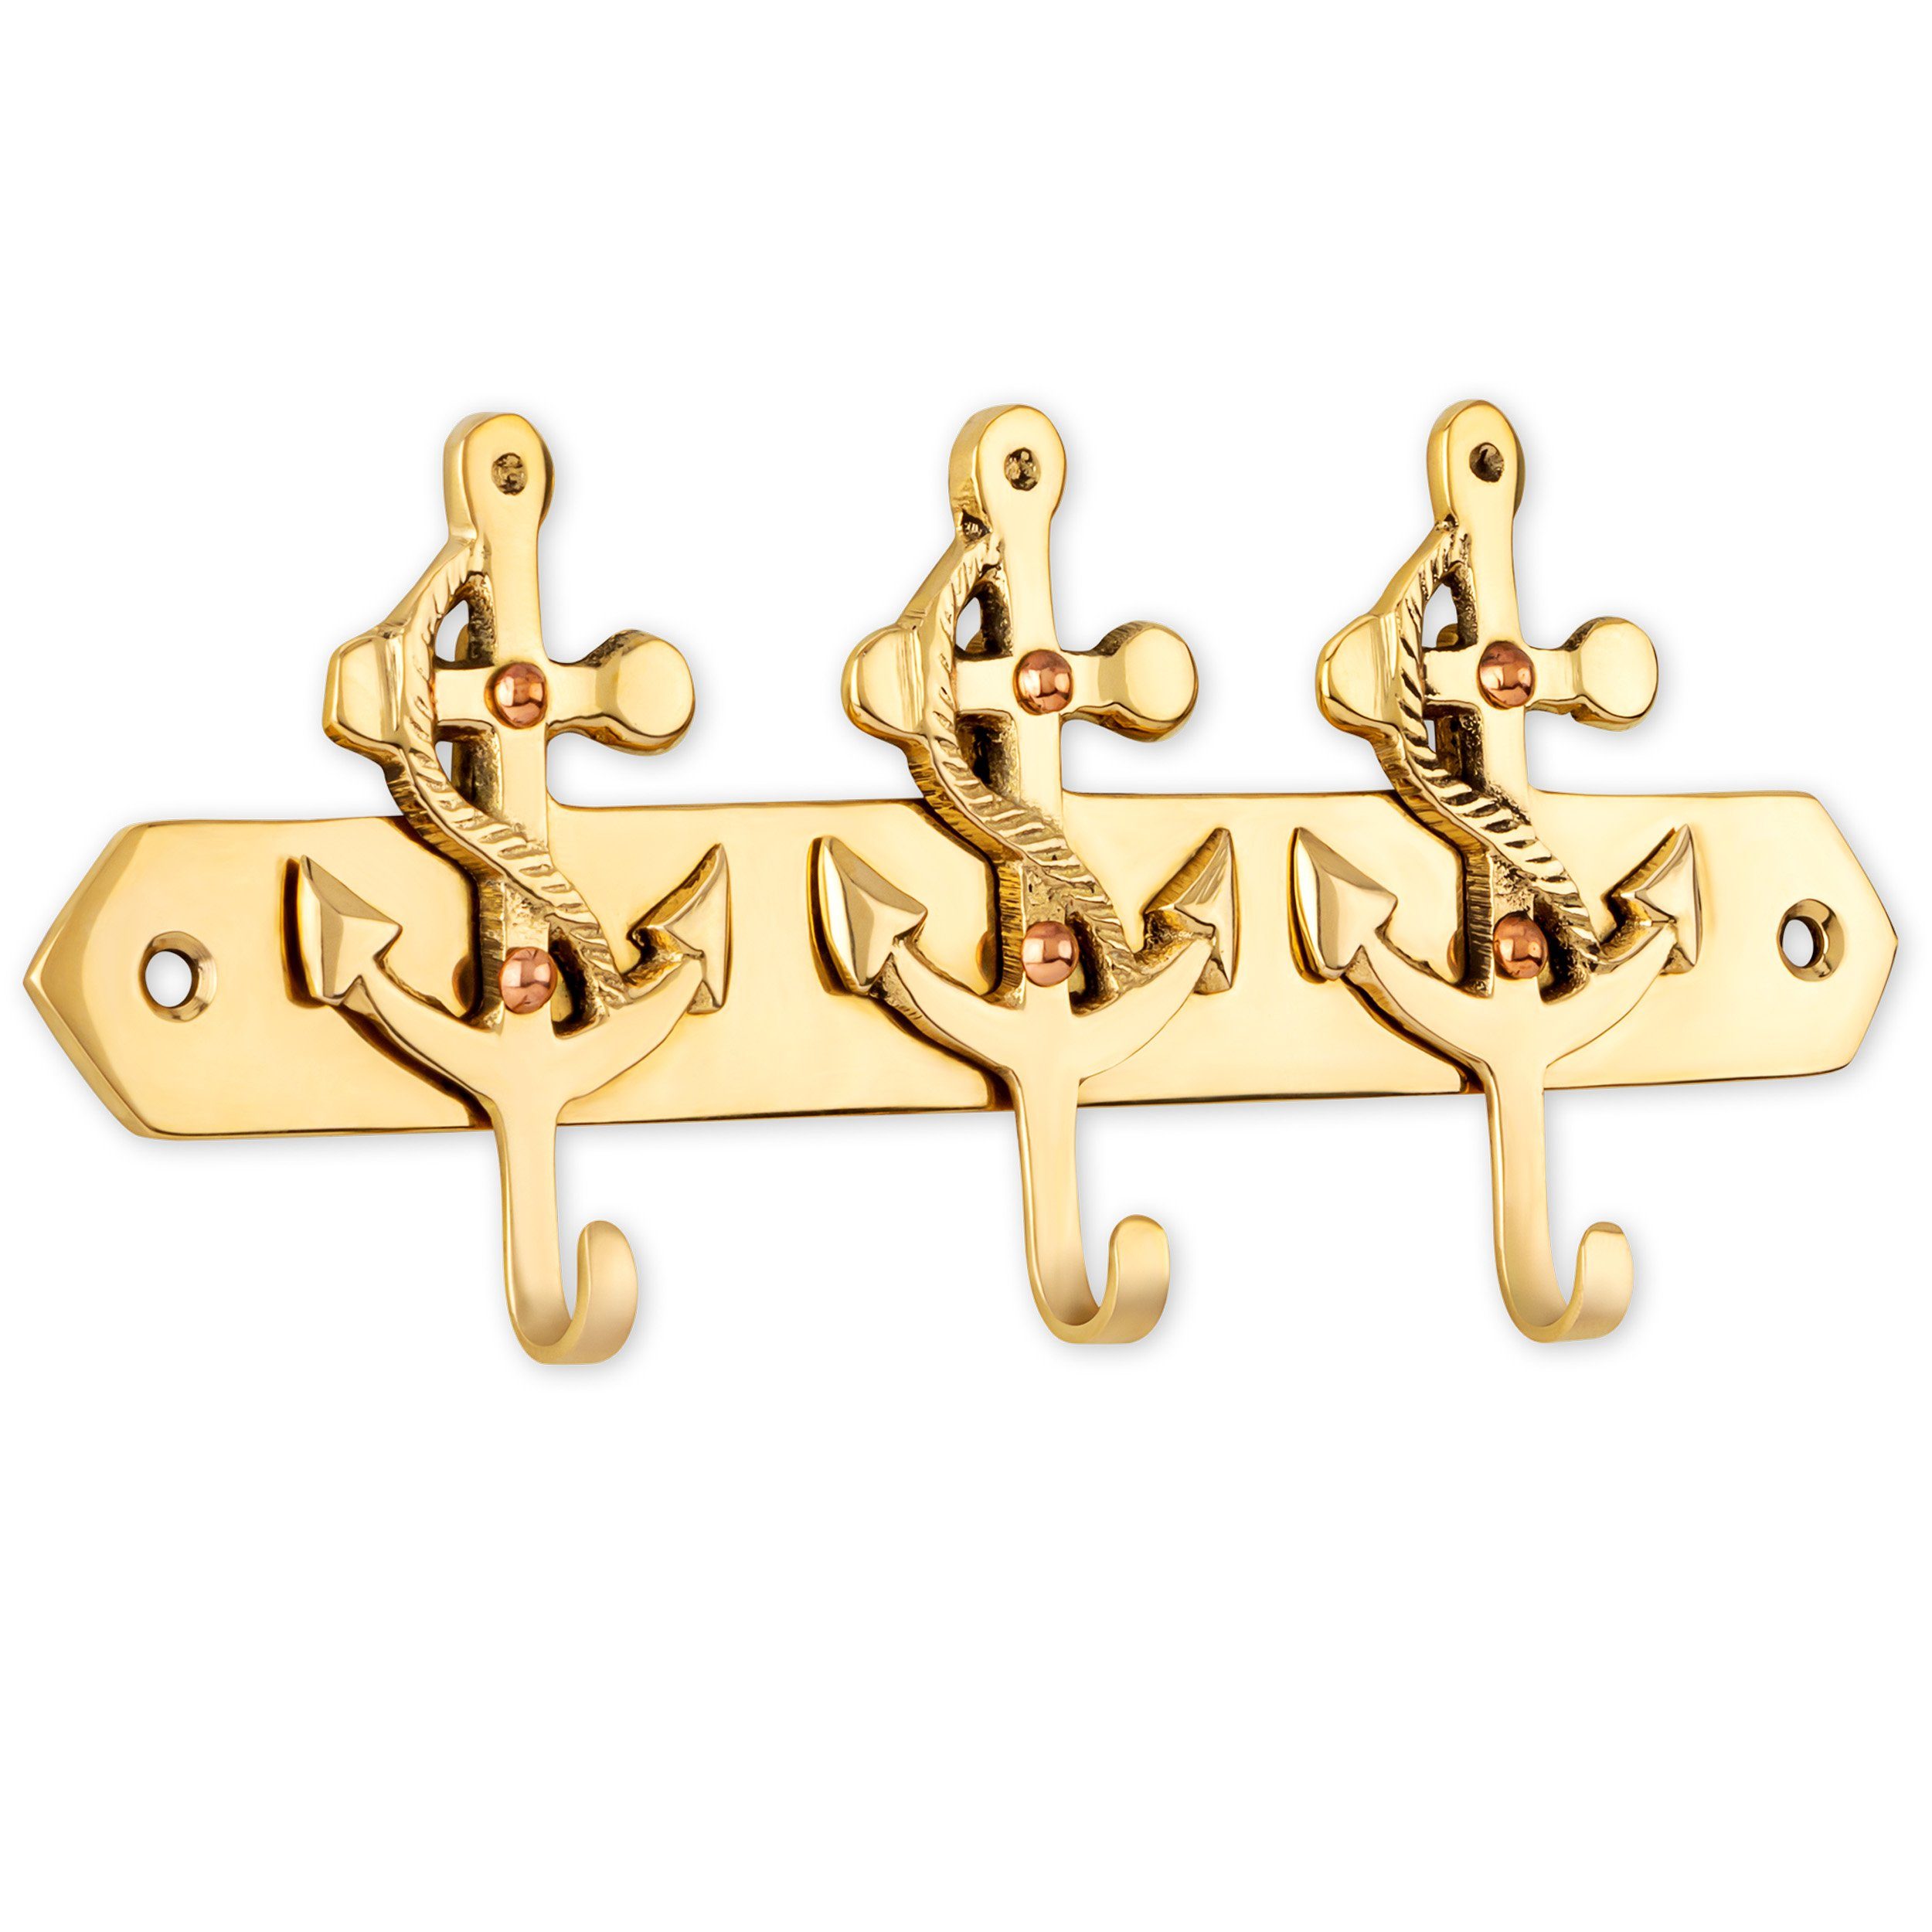 NKlaus Dekofigur Schlüsselhaken Anker 3-fach Maritim Schlüss, in Made 7 Messing Germany gold aus 16 x cm